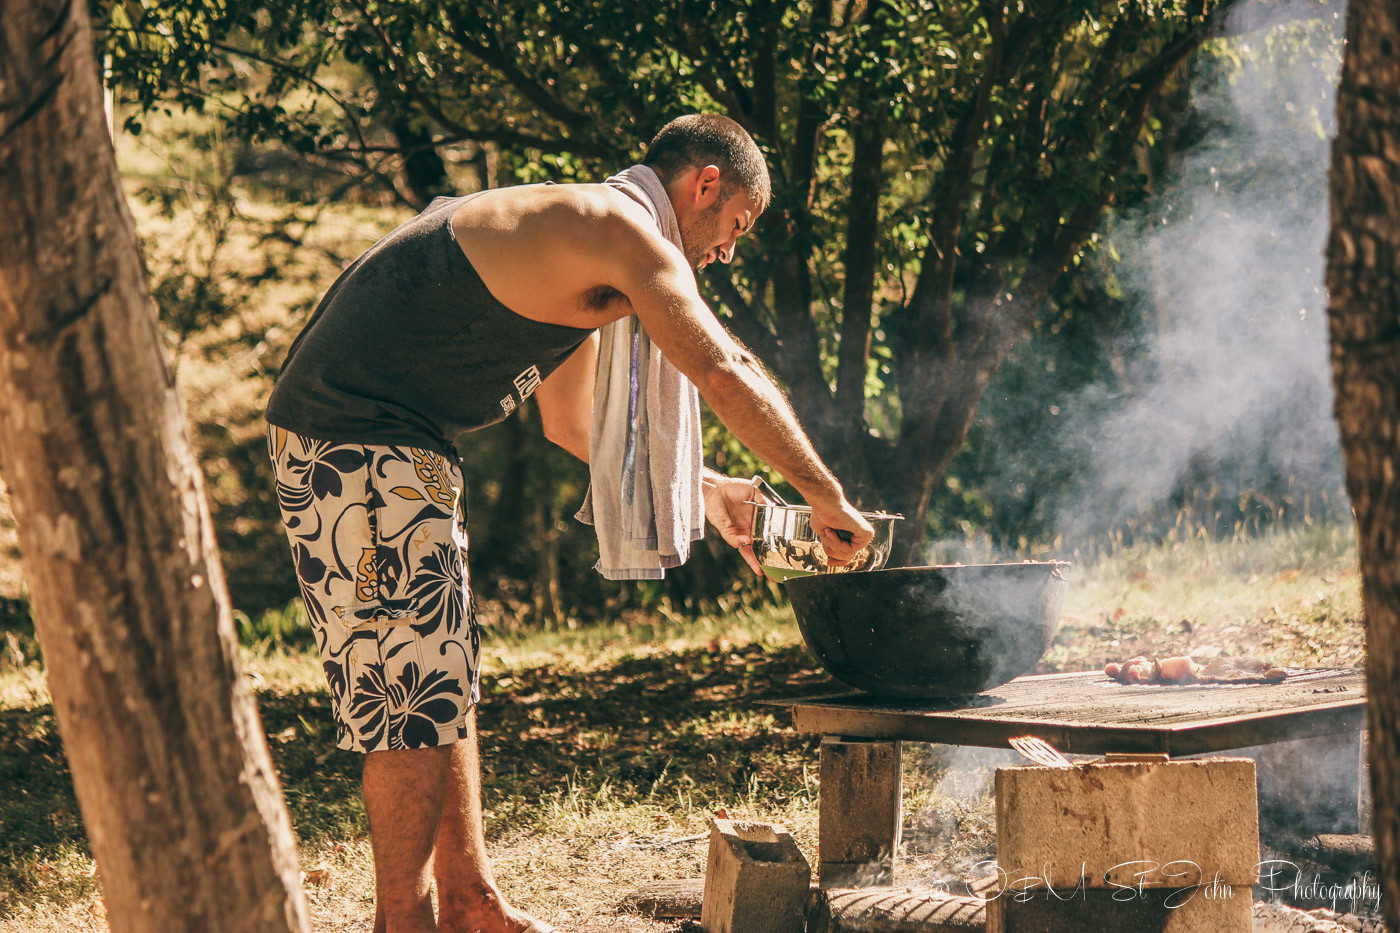 Max cooking gallo pinto in Costa Rica